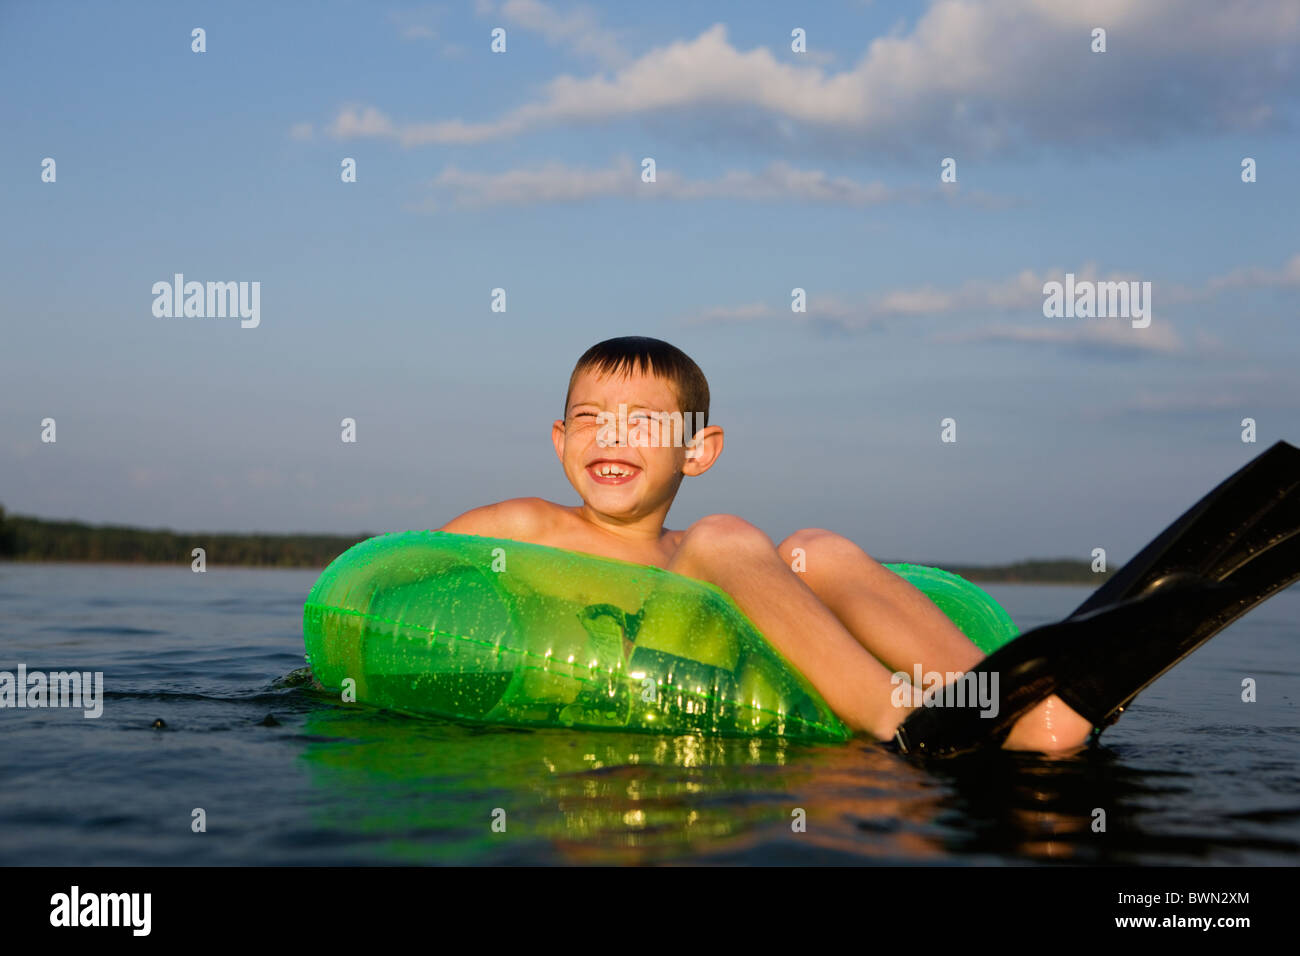 USA, Ohio, Stockton, Stockton Lake, boy (6-7) swimming in Banque D'Images